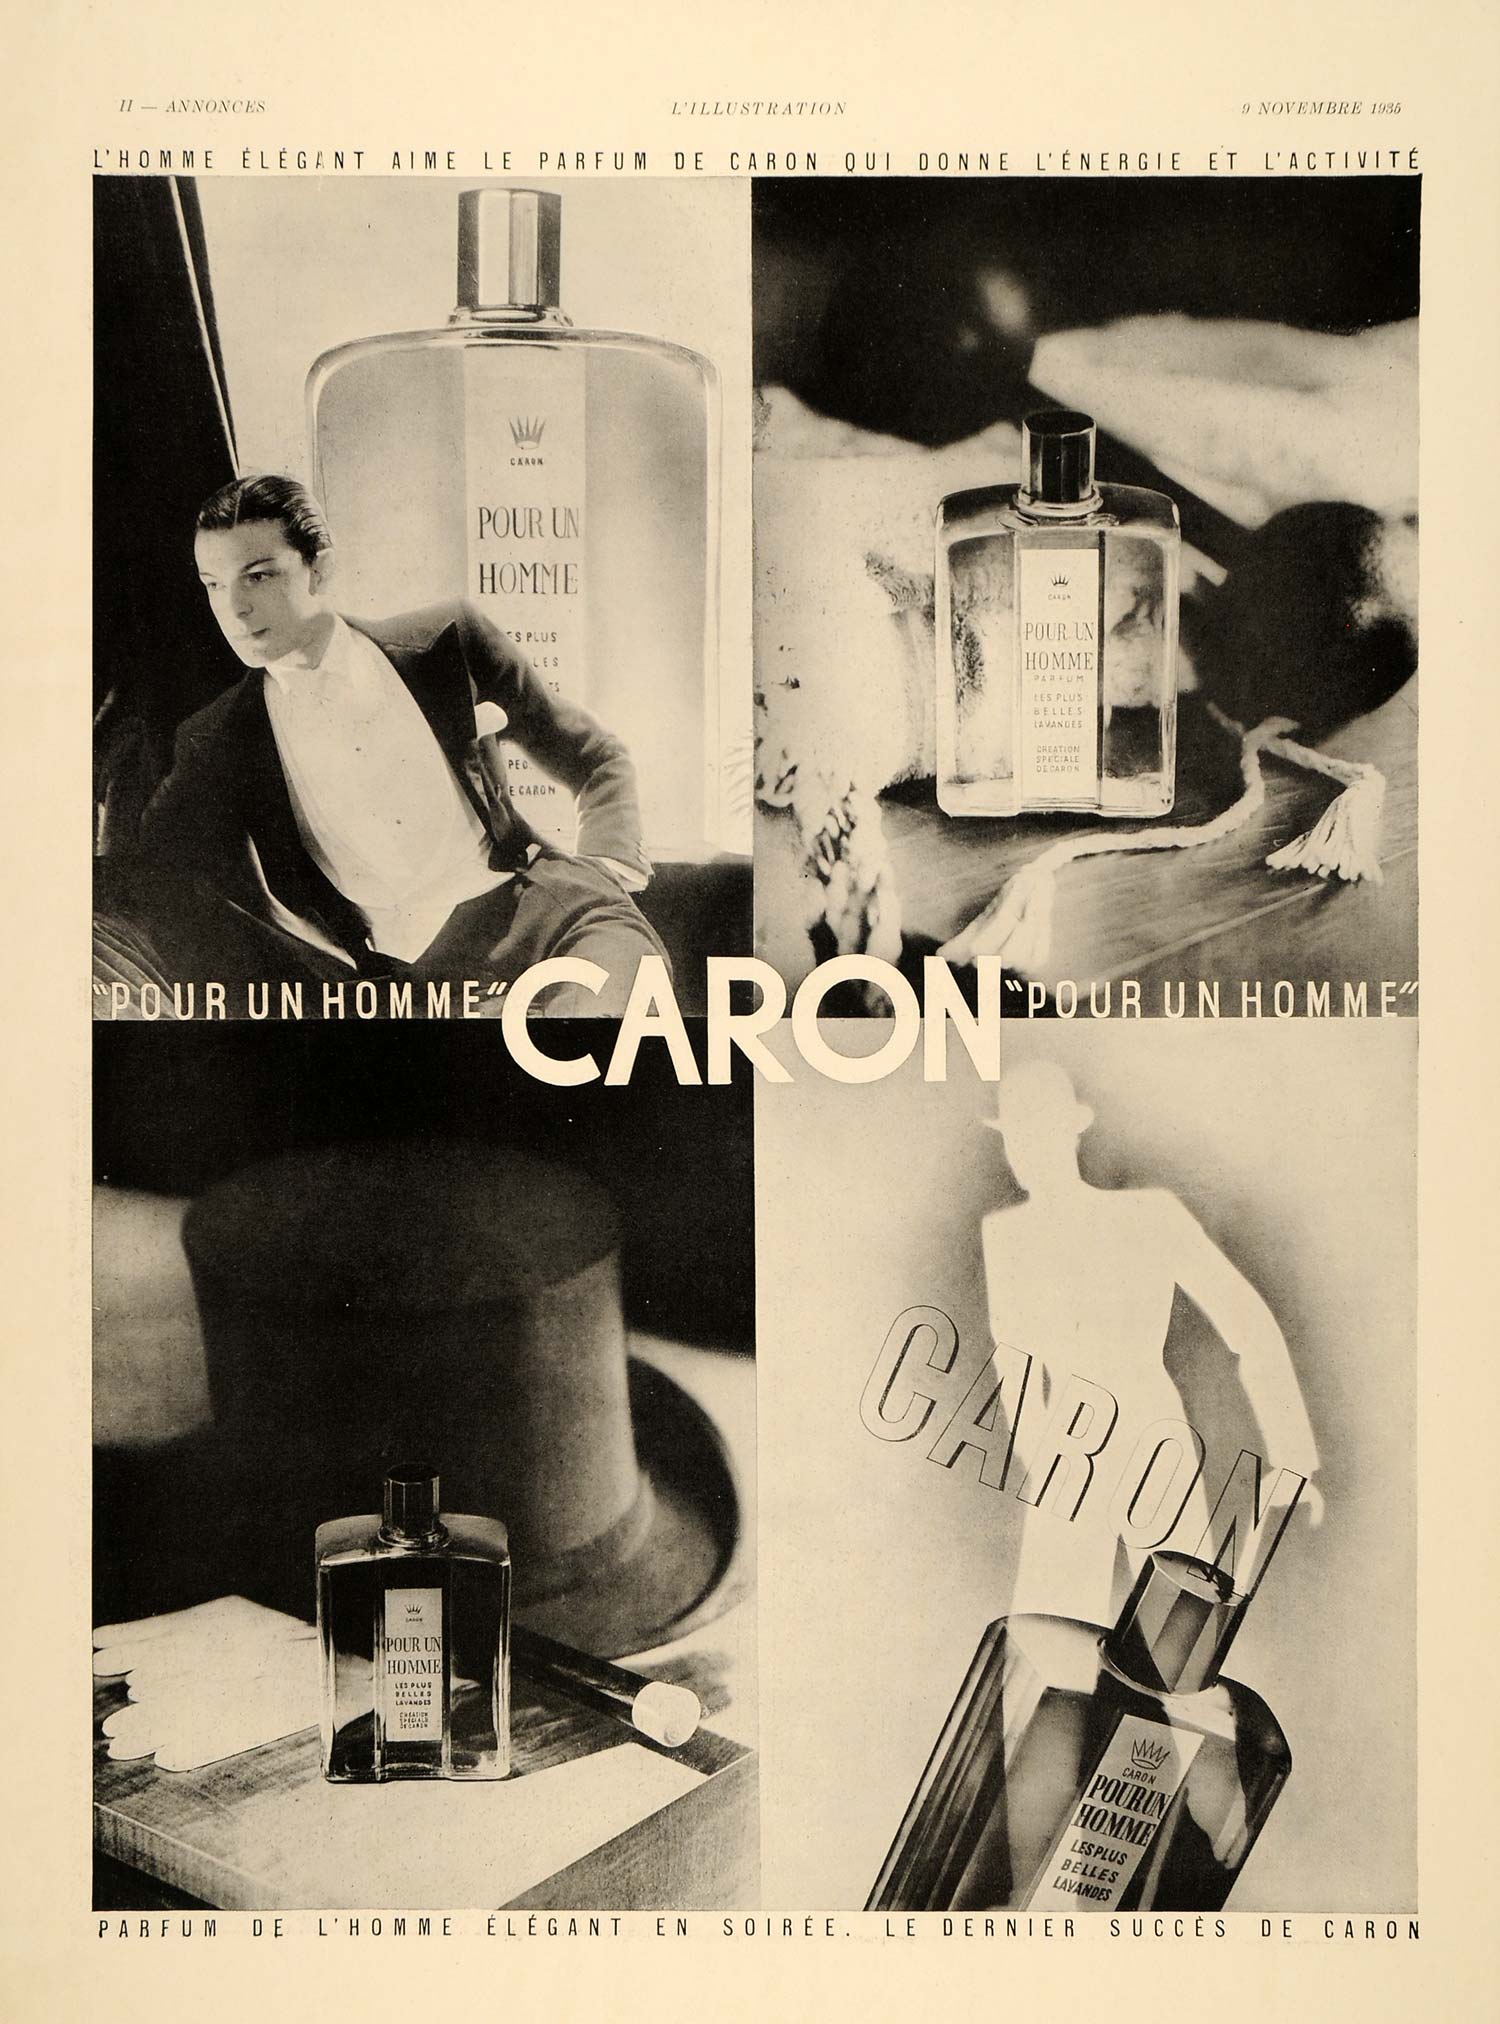 1935 Ad French Cologne Homme Man Caron Tuxedo Art Deco - ORIGINAL ILL3